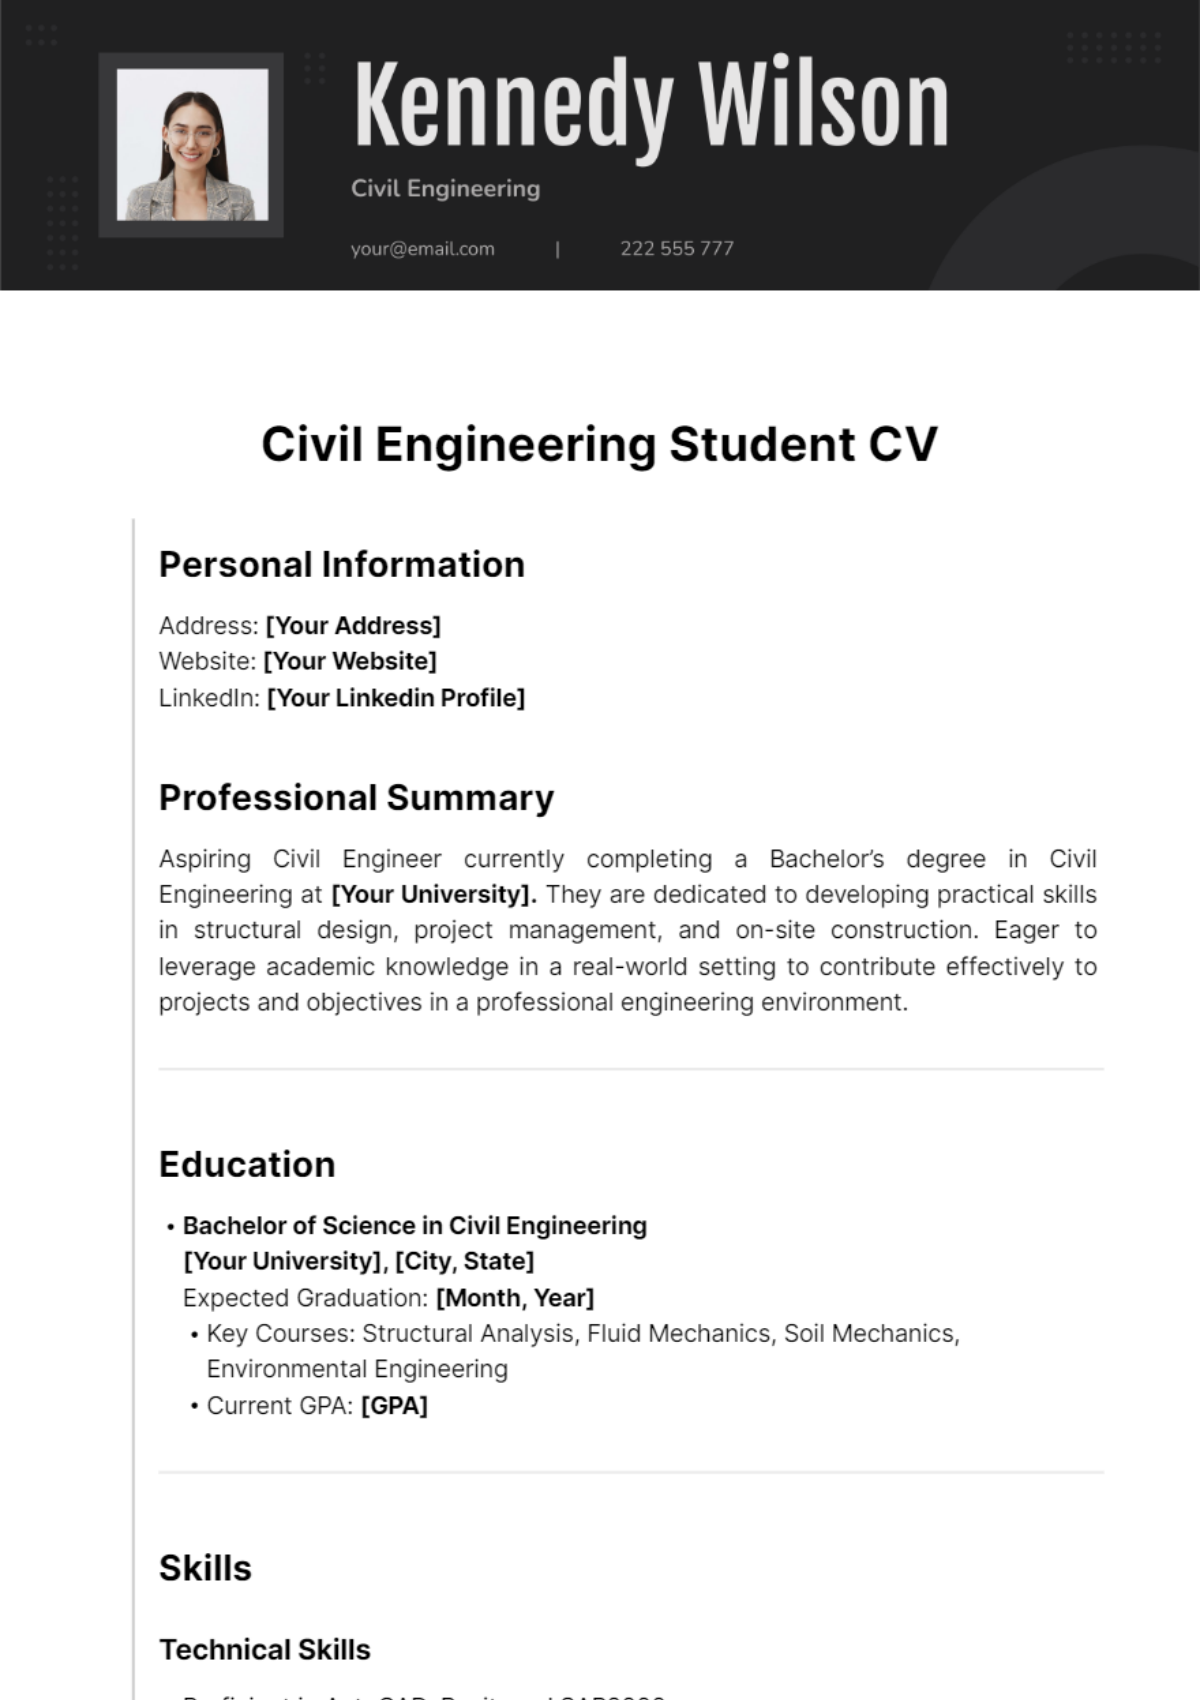 Civil Engineering Student CV Template